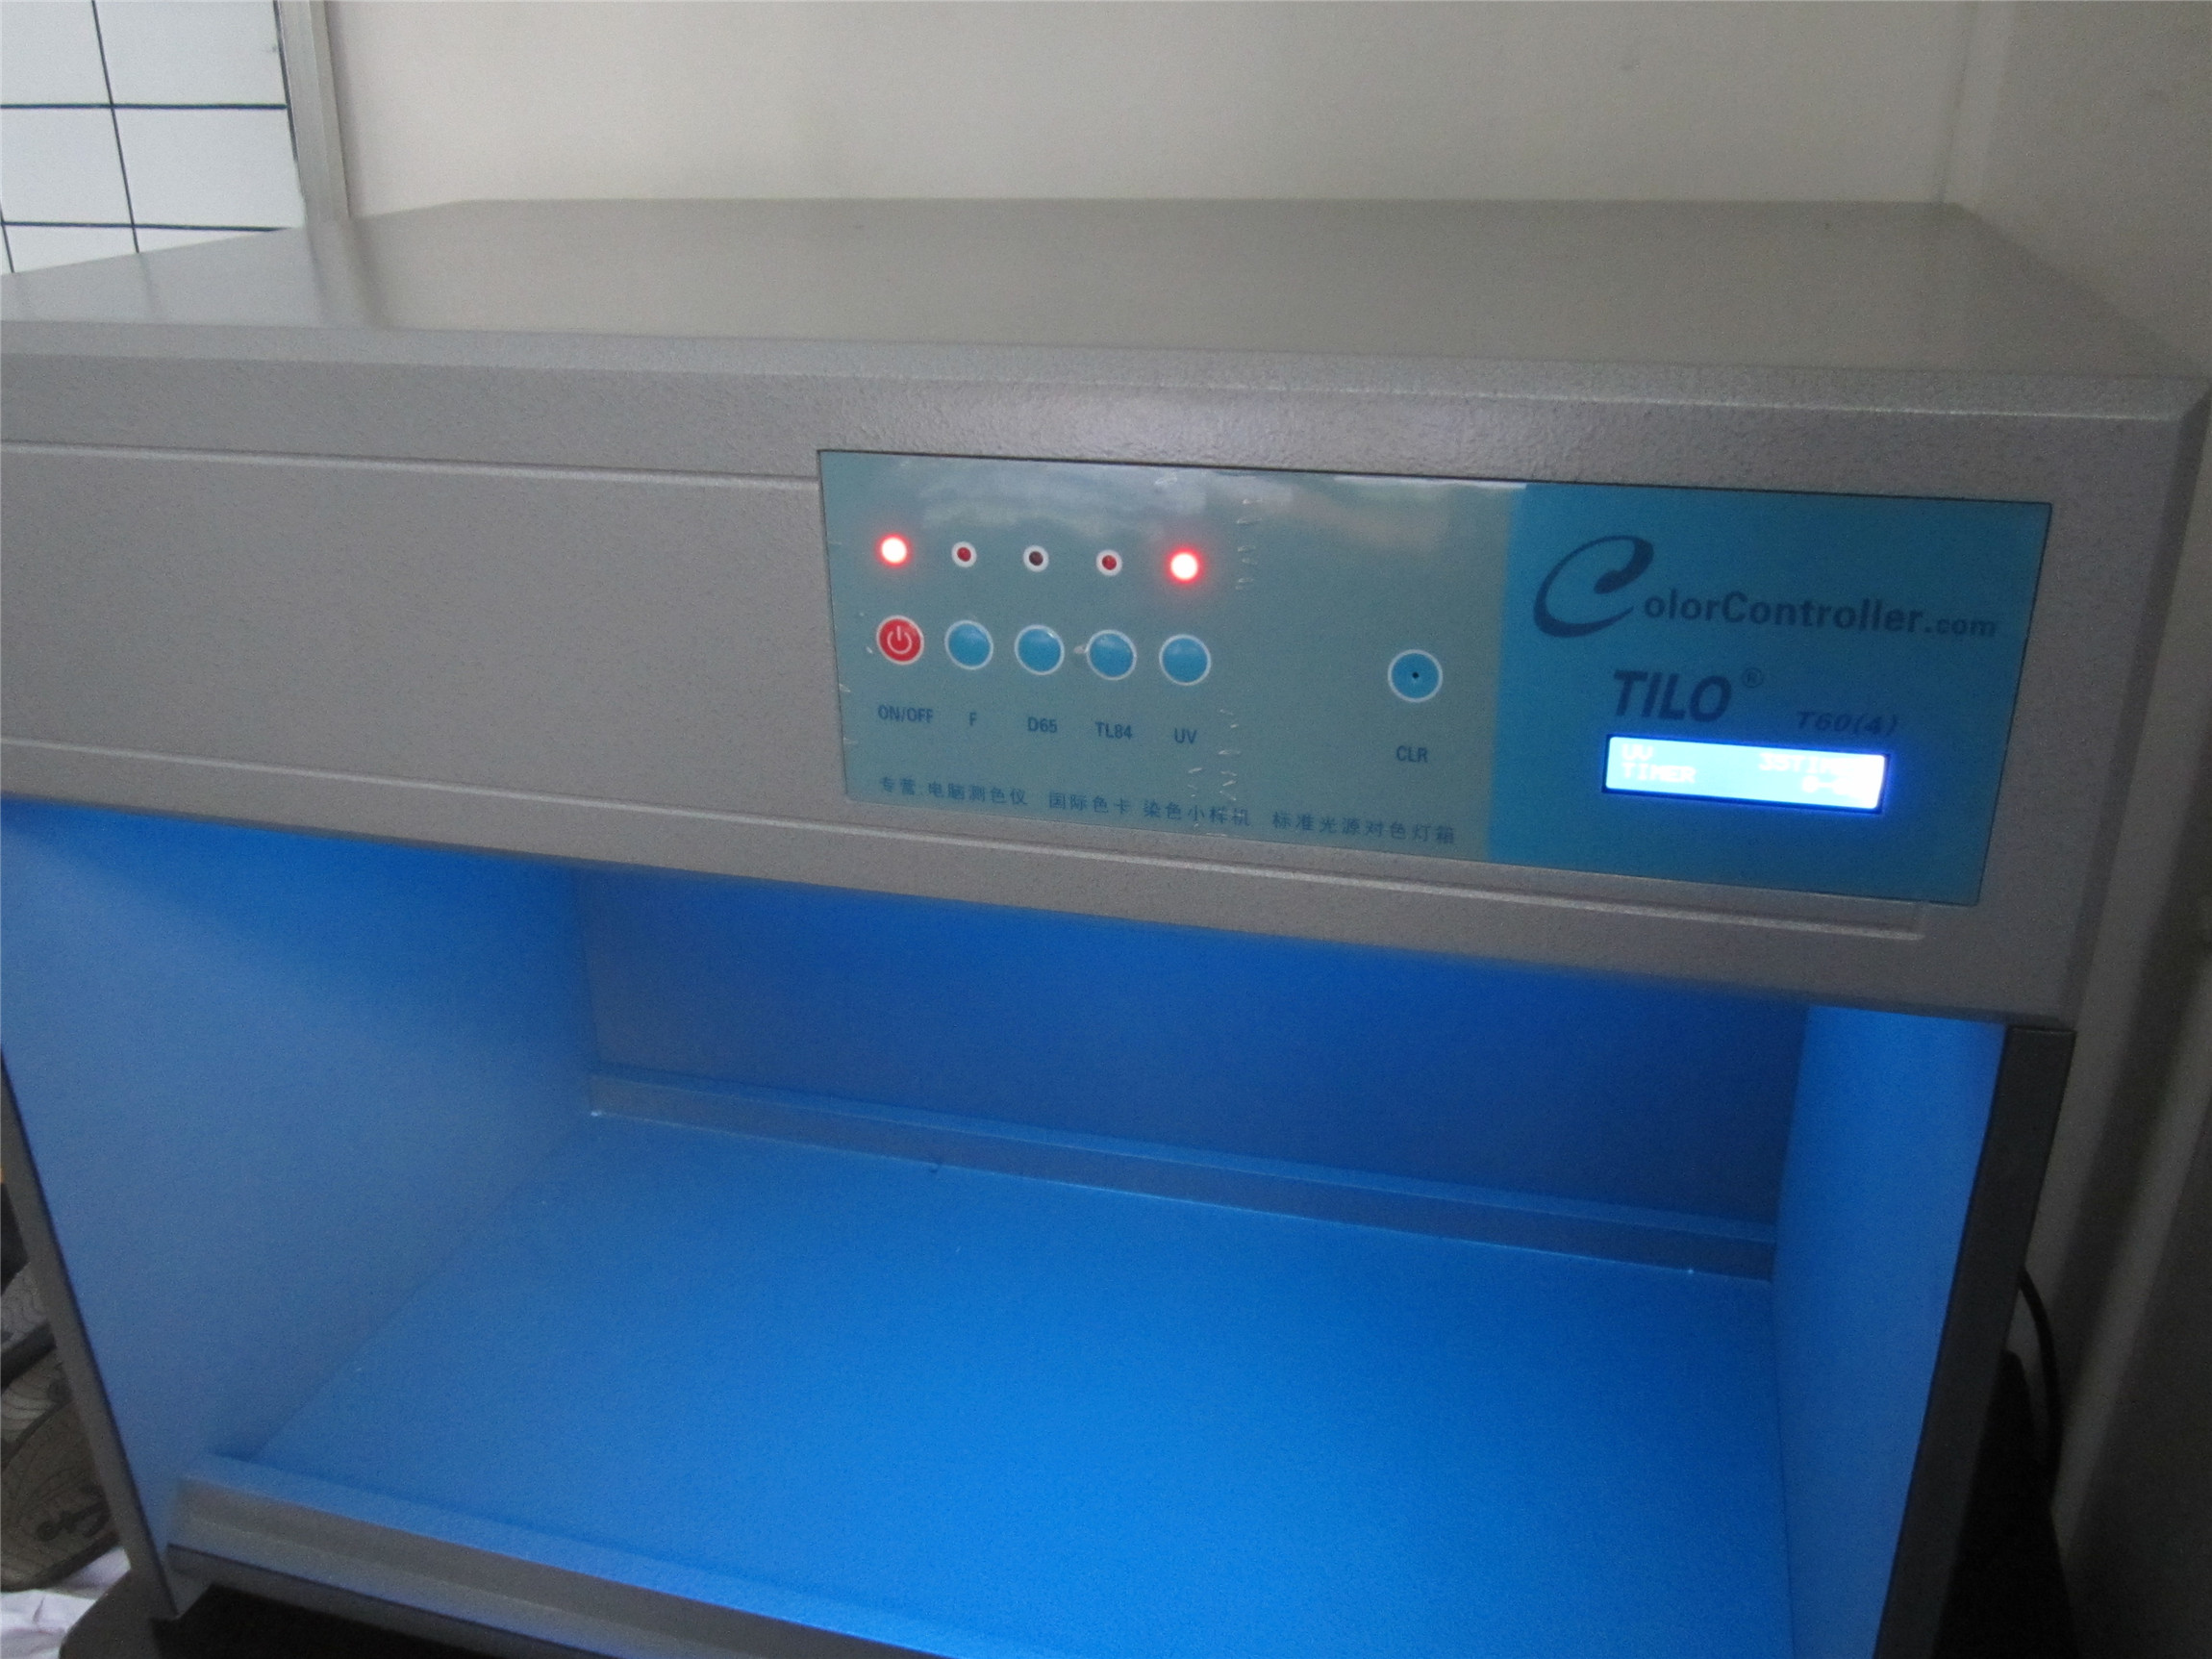 Testing machine - Standard light source box